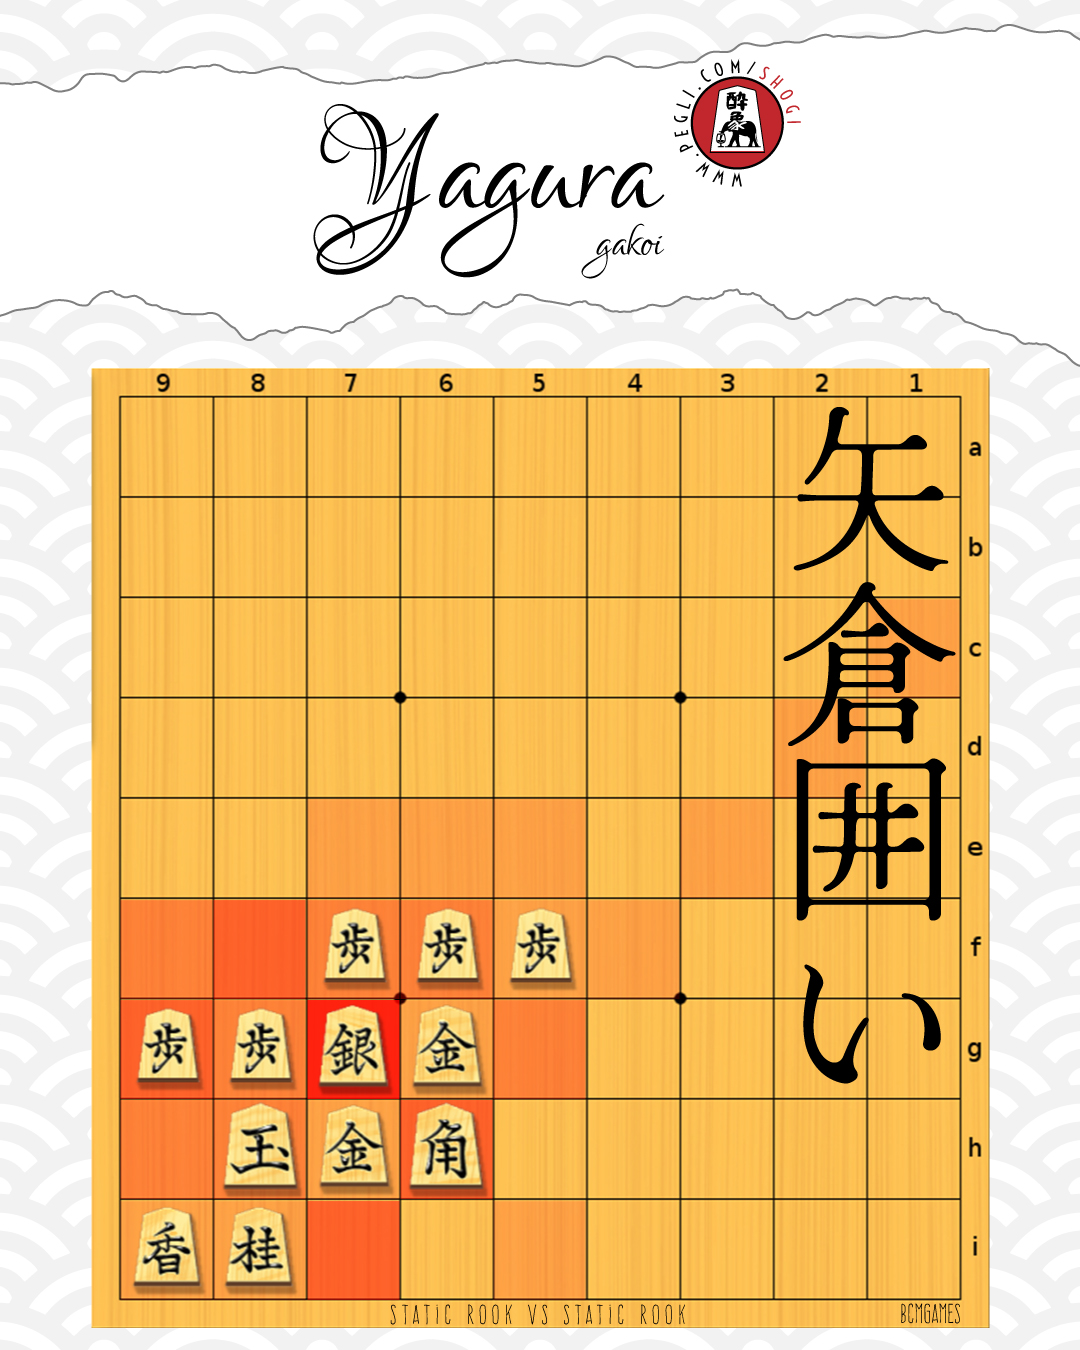 shogi - kakoi: yagura gakoi